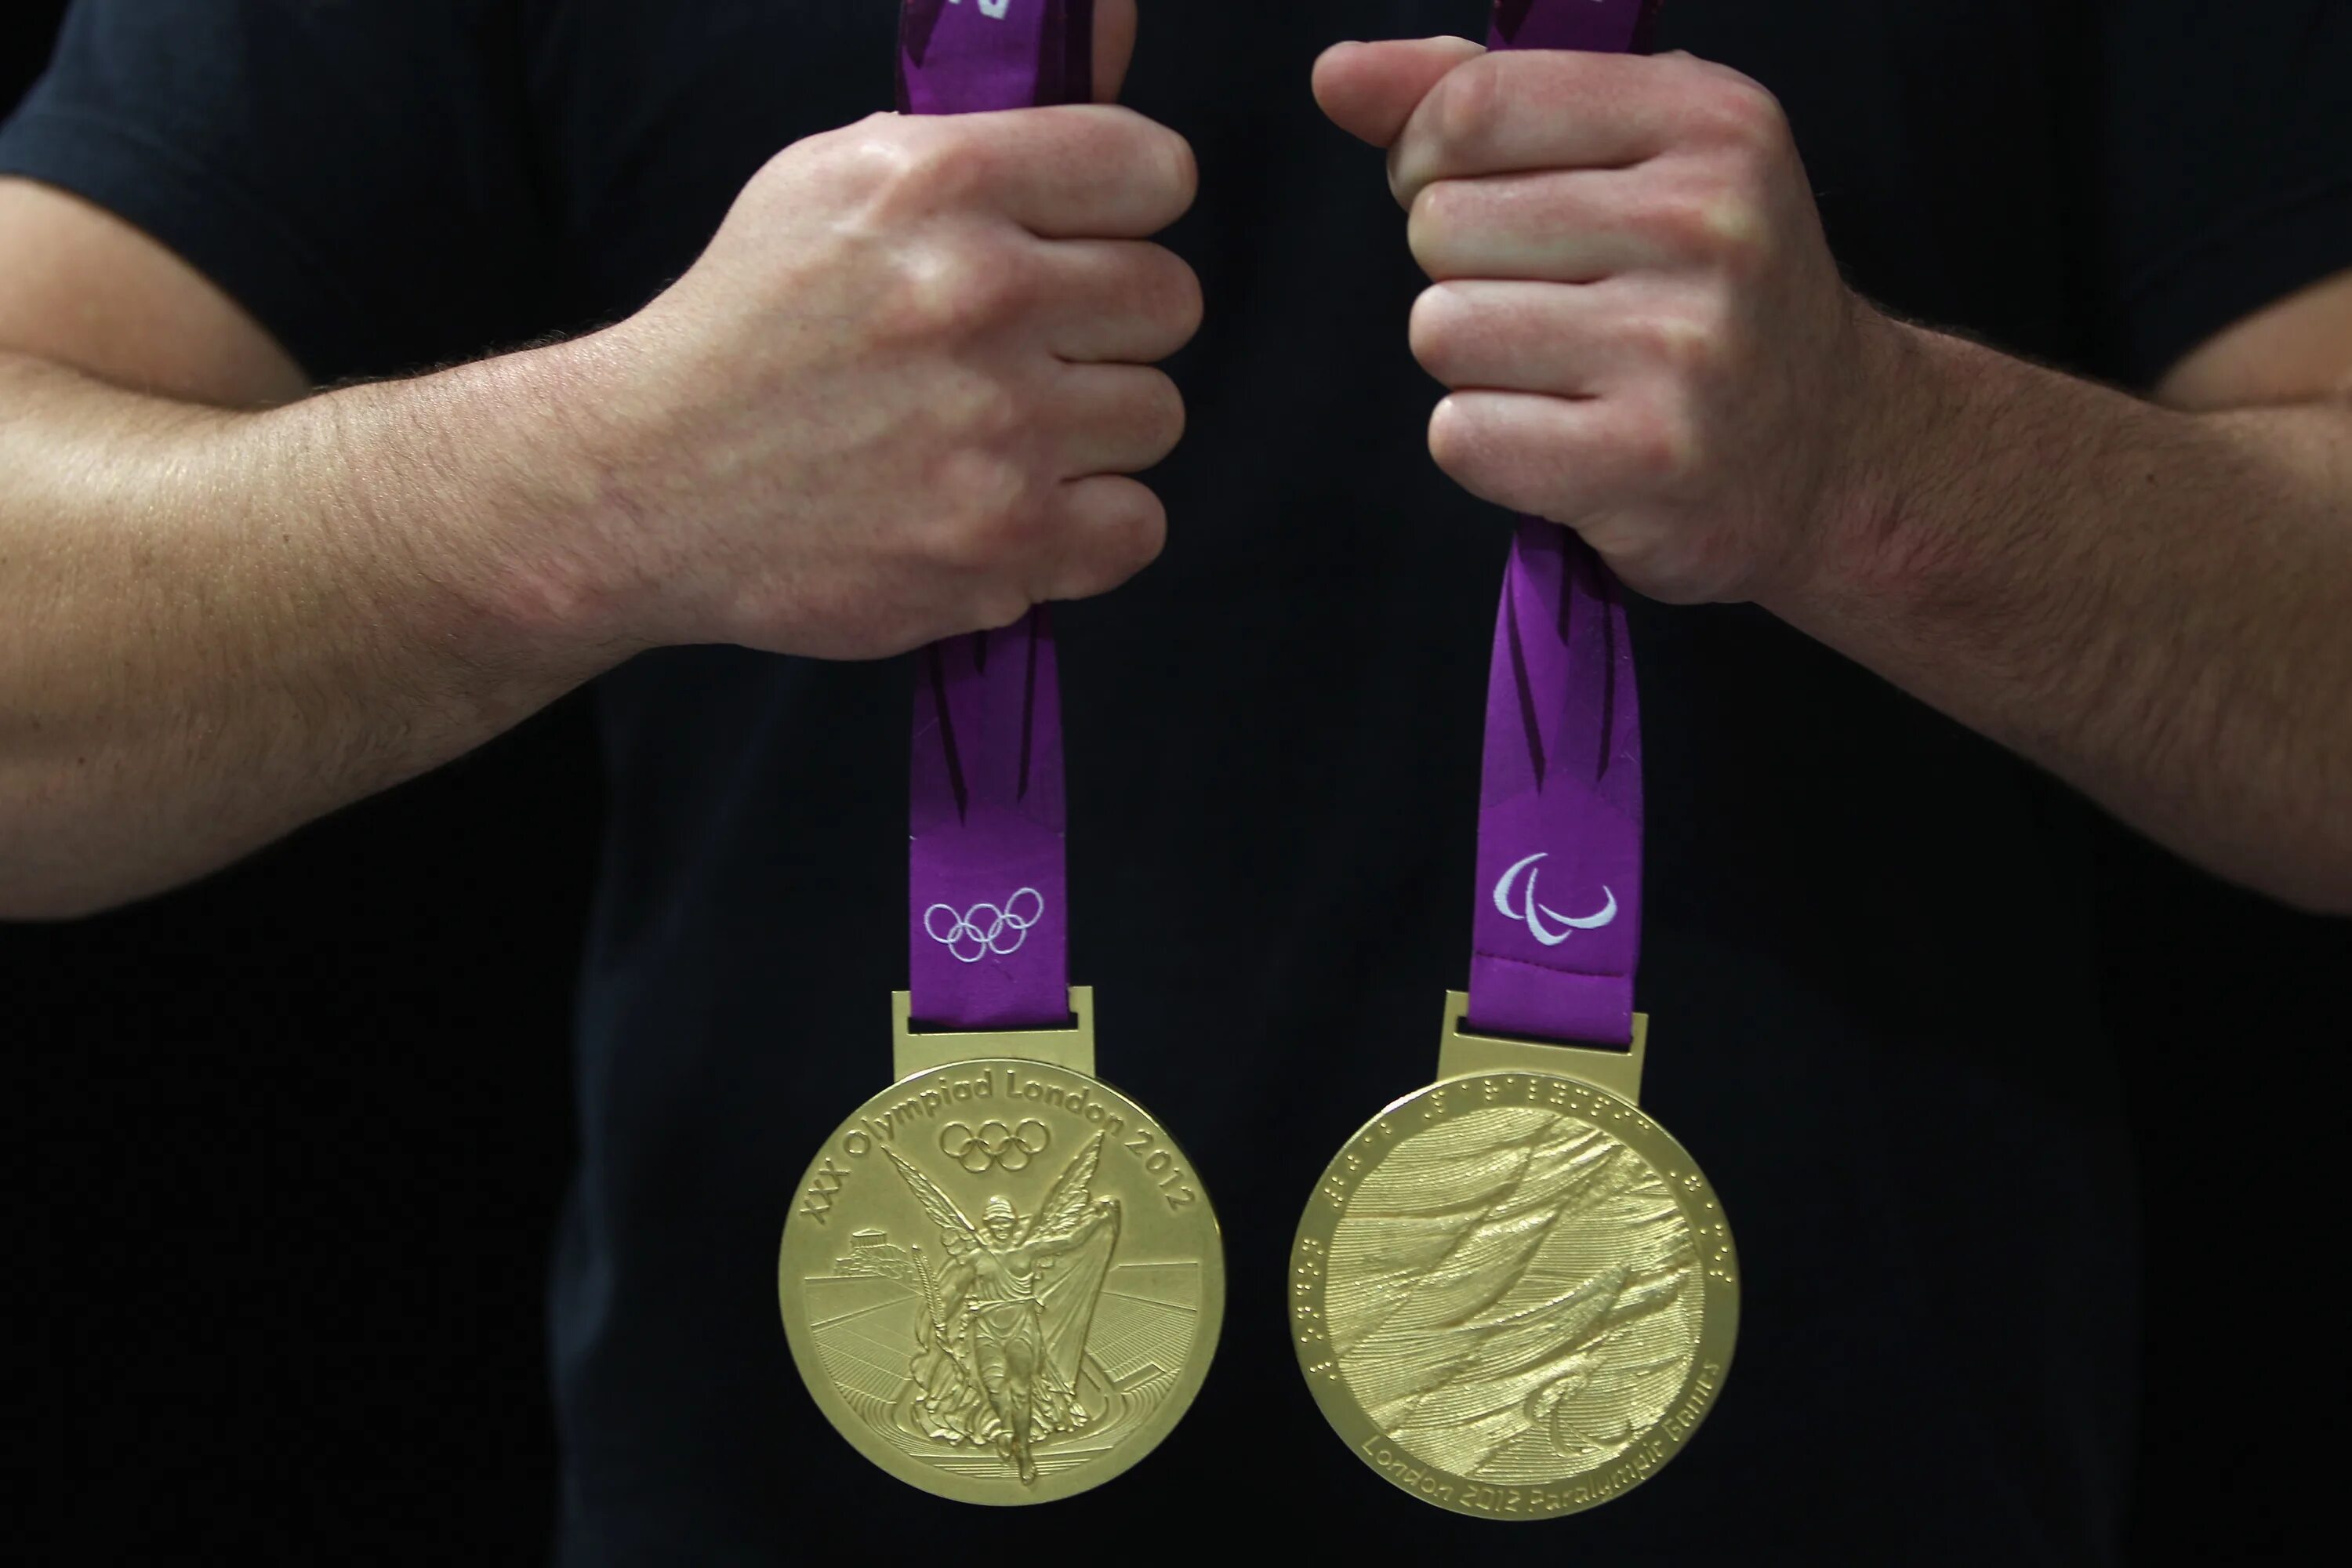 Medal 2012. Олимпийская медаль 2024 Париж. Золотая Олимпийская медаль 2024. Медаль драгон Райз. Медаль серебро Лондон 2012 дзюдо.